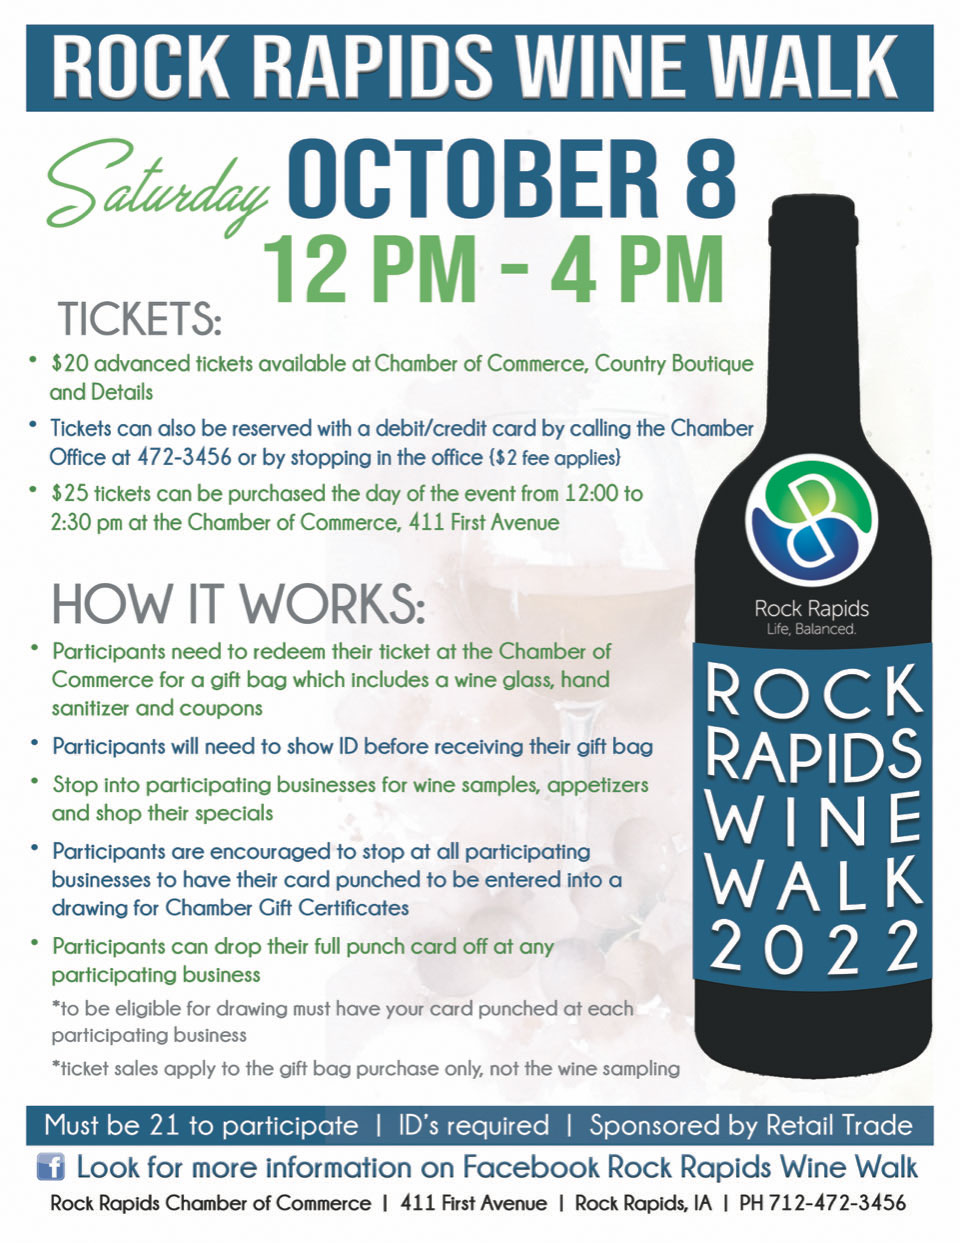 Rock Rapids Wine Walk 2022